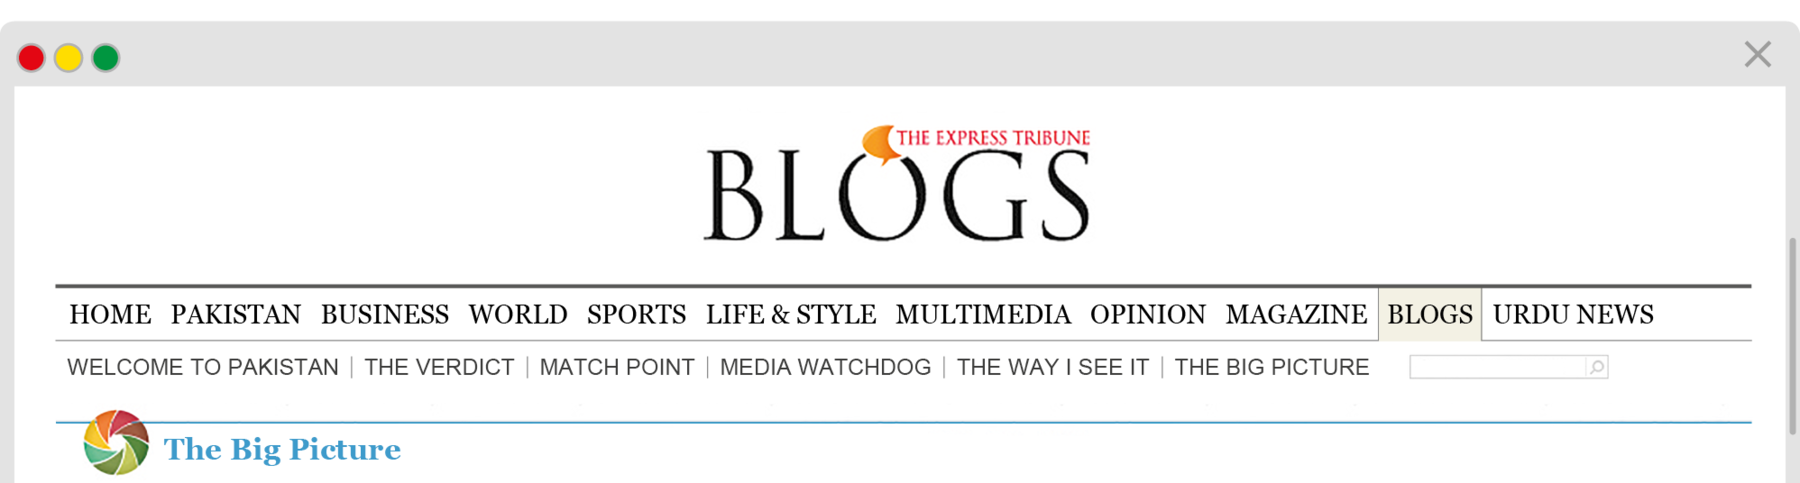 Reprodução de página da internet.
Na parte superior, Título: The Express Tribune  Blogs. Menus: HOME, PAKISTAN, BUSINESS, WORLD, SPORTS, LIFE & STYLE, MULTIMEDIA, OPINION, MAGAZINE, BLOGS, URDU NEWS. WELCOME TO PAKISTAN ,THE VERDICT, MATCH POINT, MEDIA WATCHDOG, THE WAY I SEE IT, THE BIG PICTURE. À esquerda, forma redonda com faixas coloridas e texto: The Big Picture.